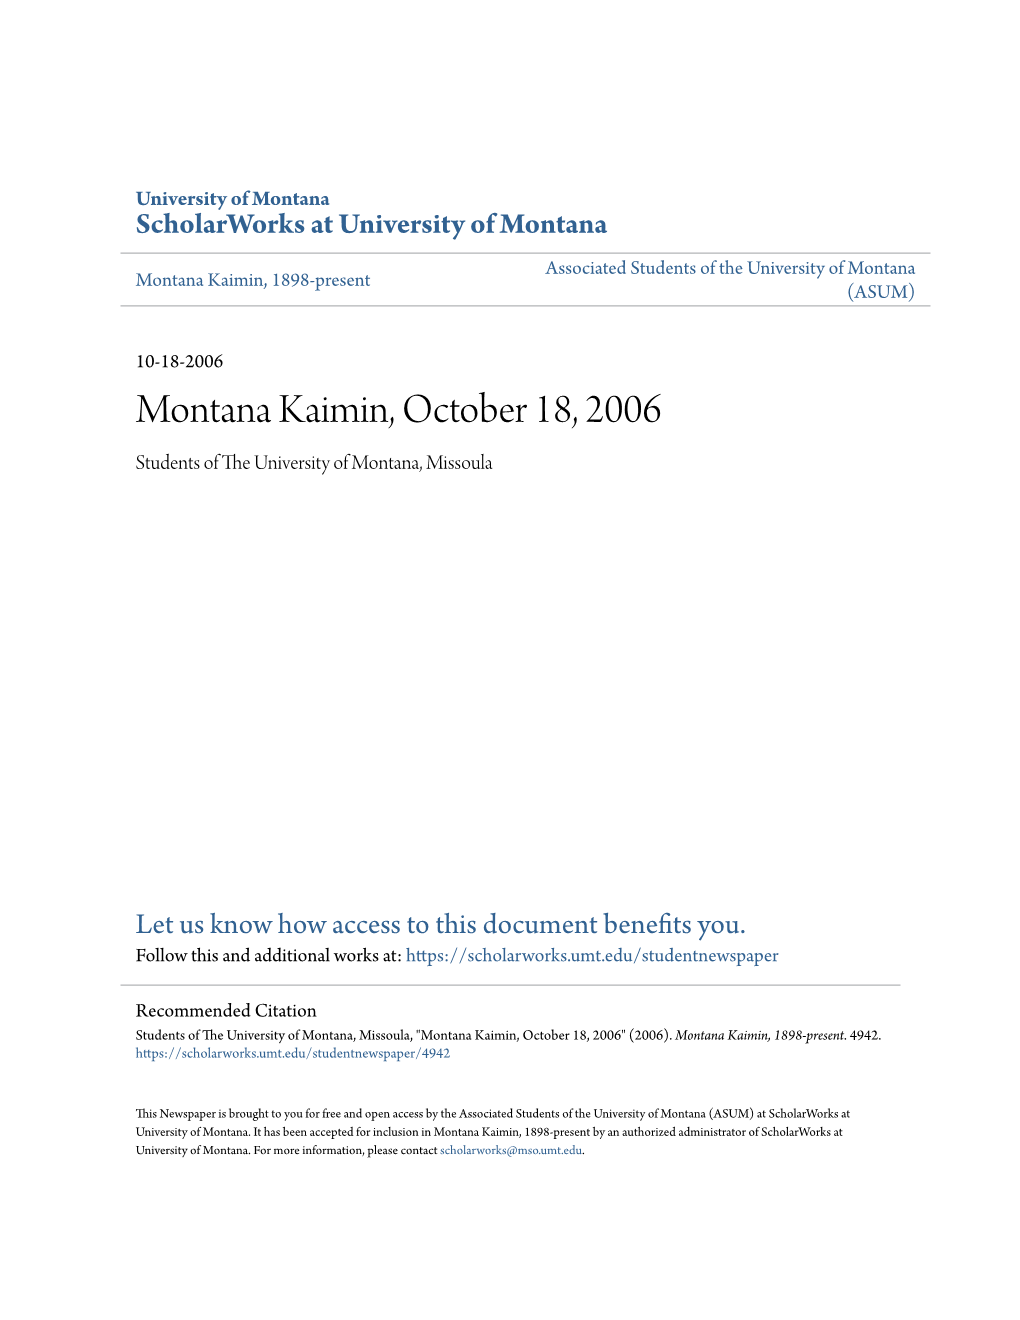 Montana Kaimin, October 18, 2006 Students of the Niu Versity of Montana, Missoula